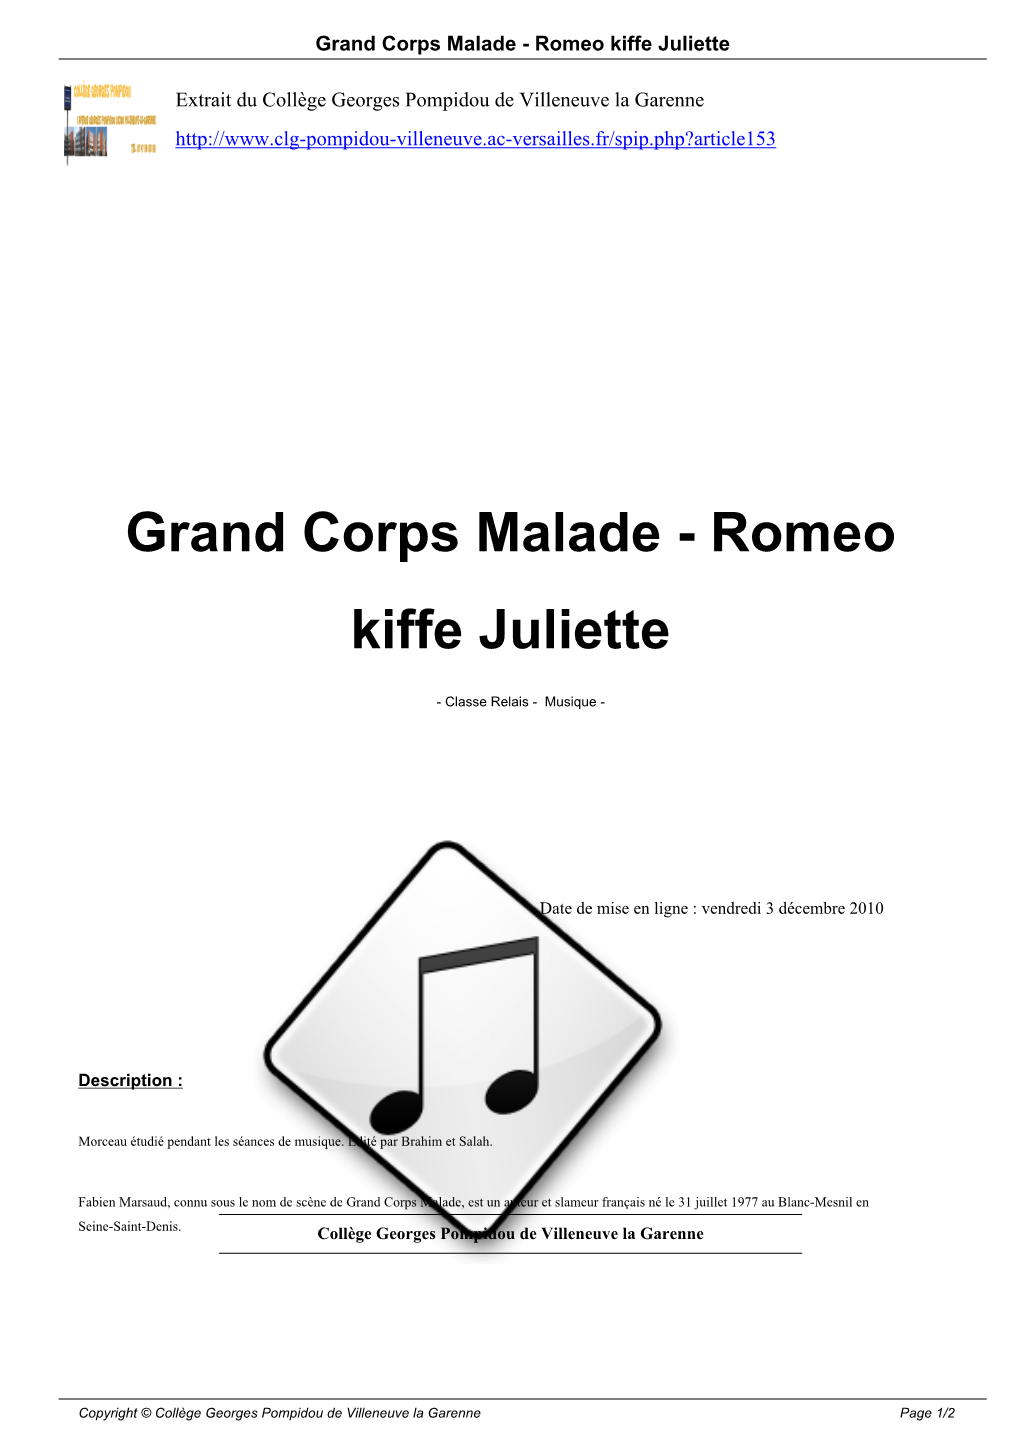 Grand Corps Malade - Romeo Kiffe Juliette